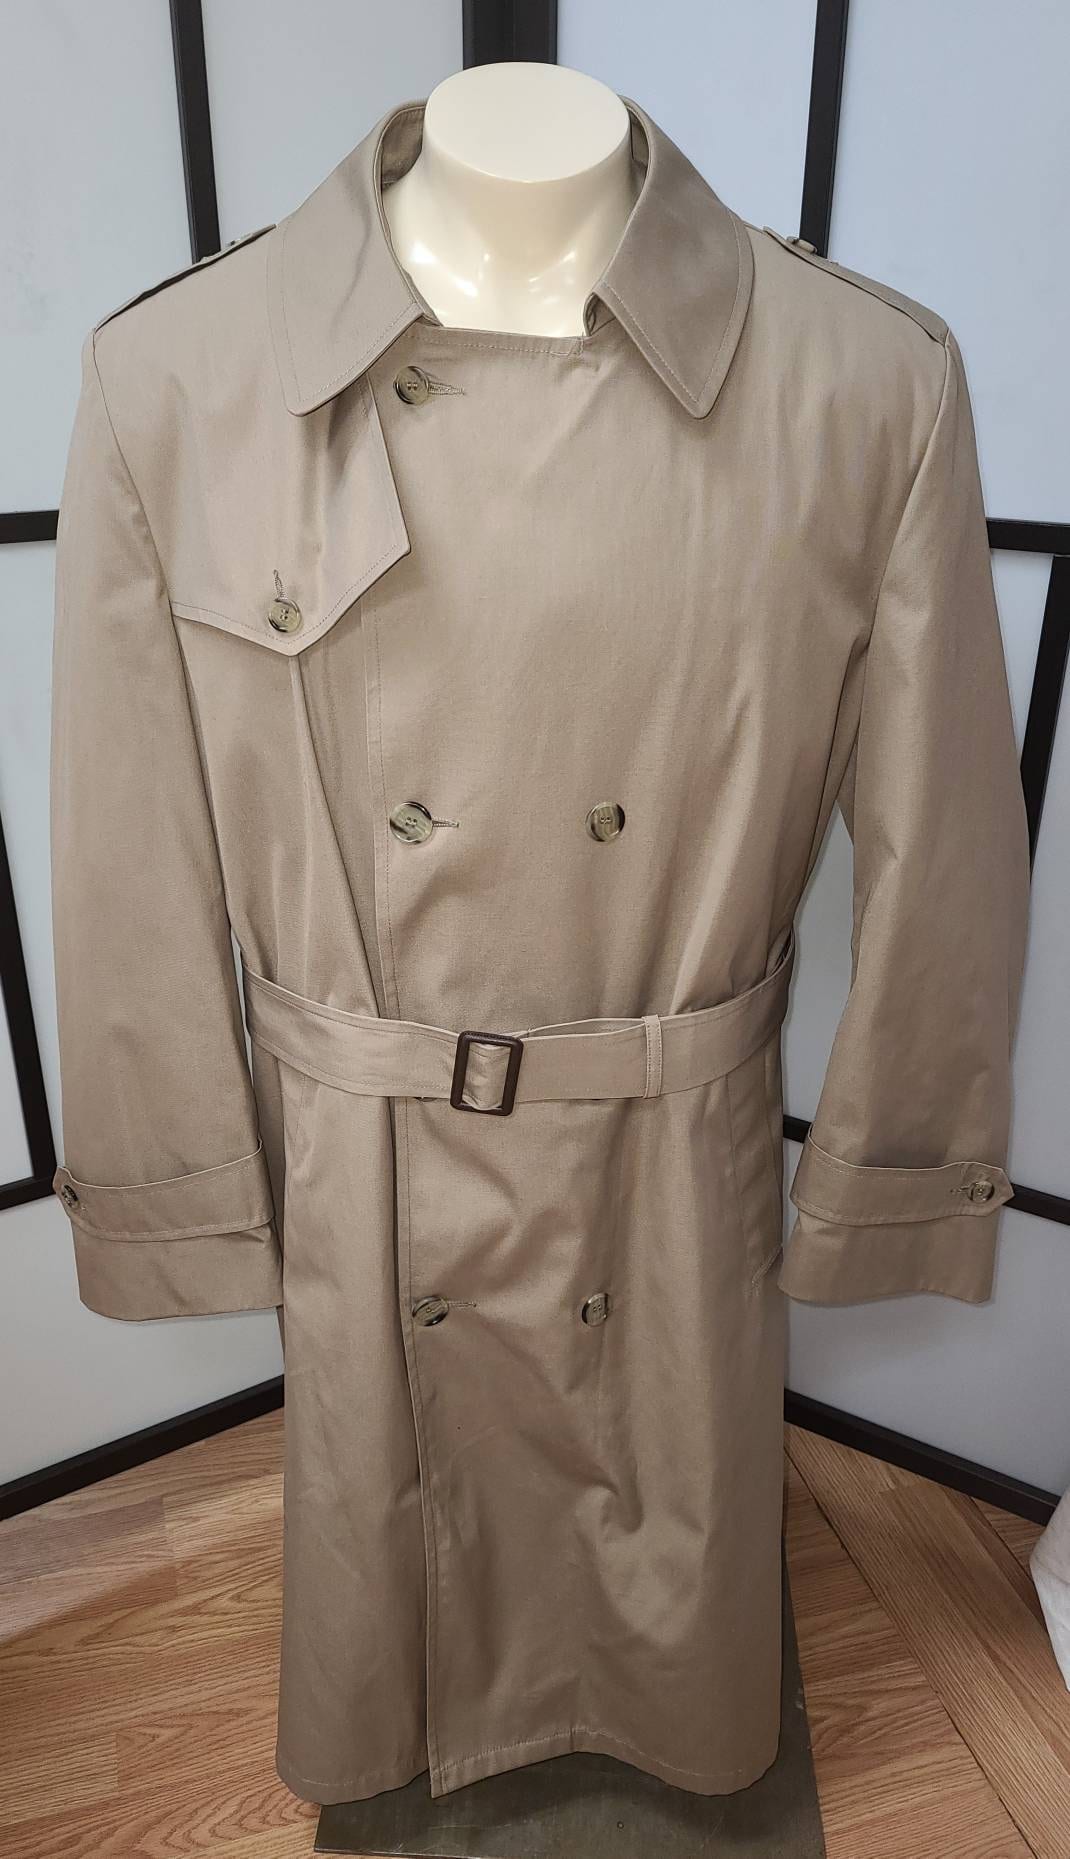 Unworn Vintage Men's Coat 1970s Beige Botany 500 Overcoat Zip Out Brown Faux Fur Lining Classic Double Breasted 46 R